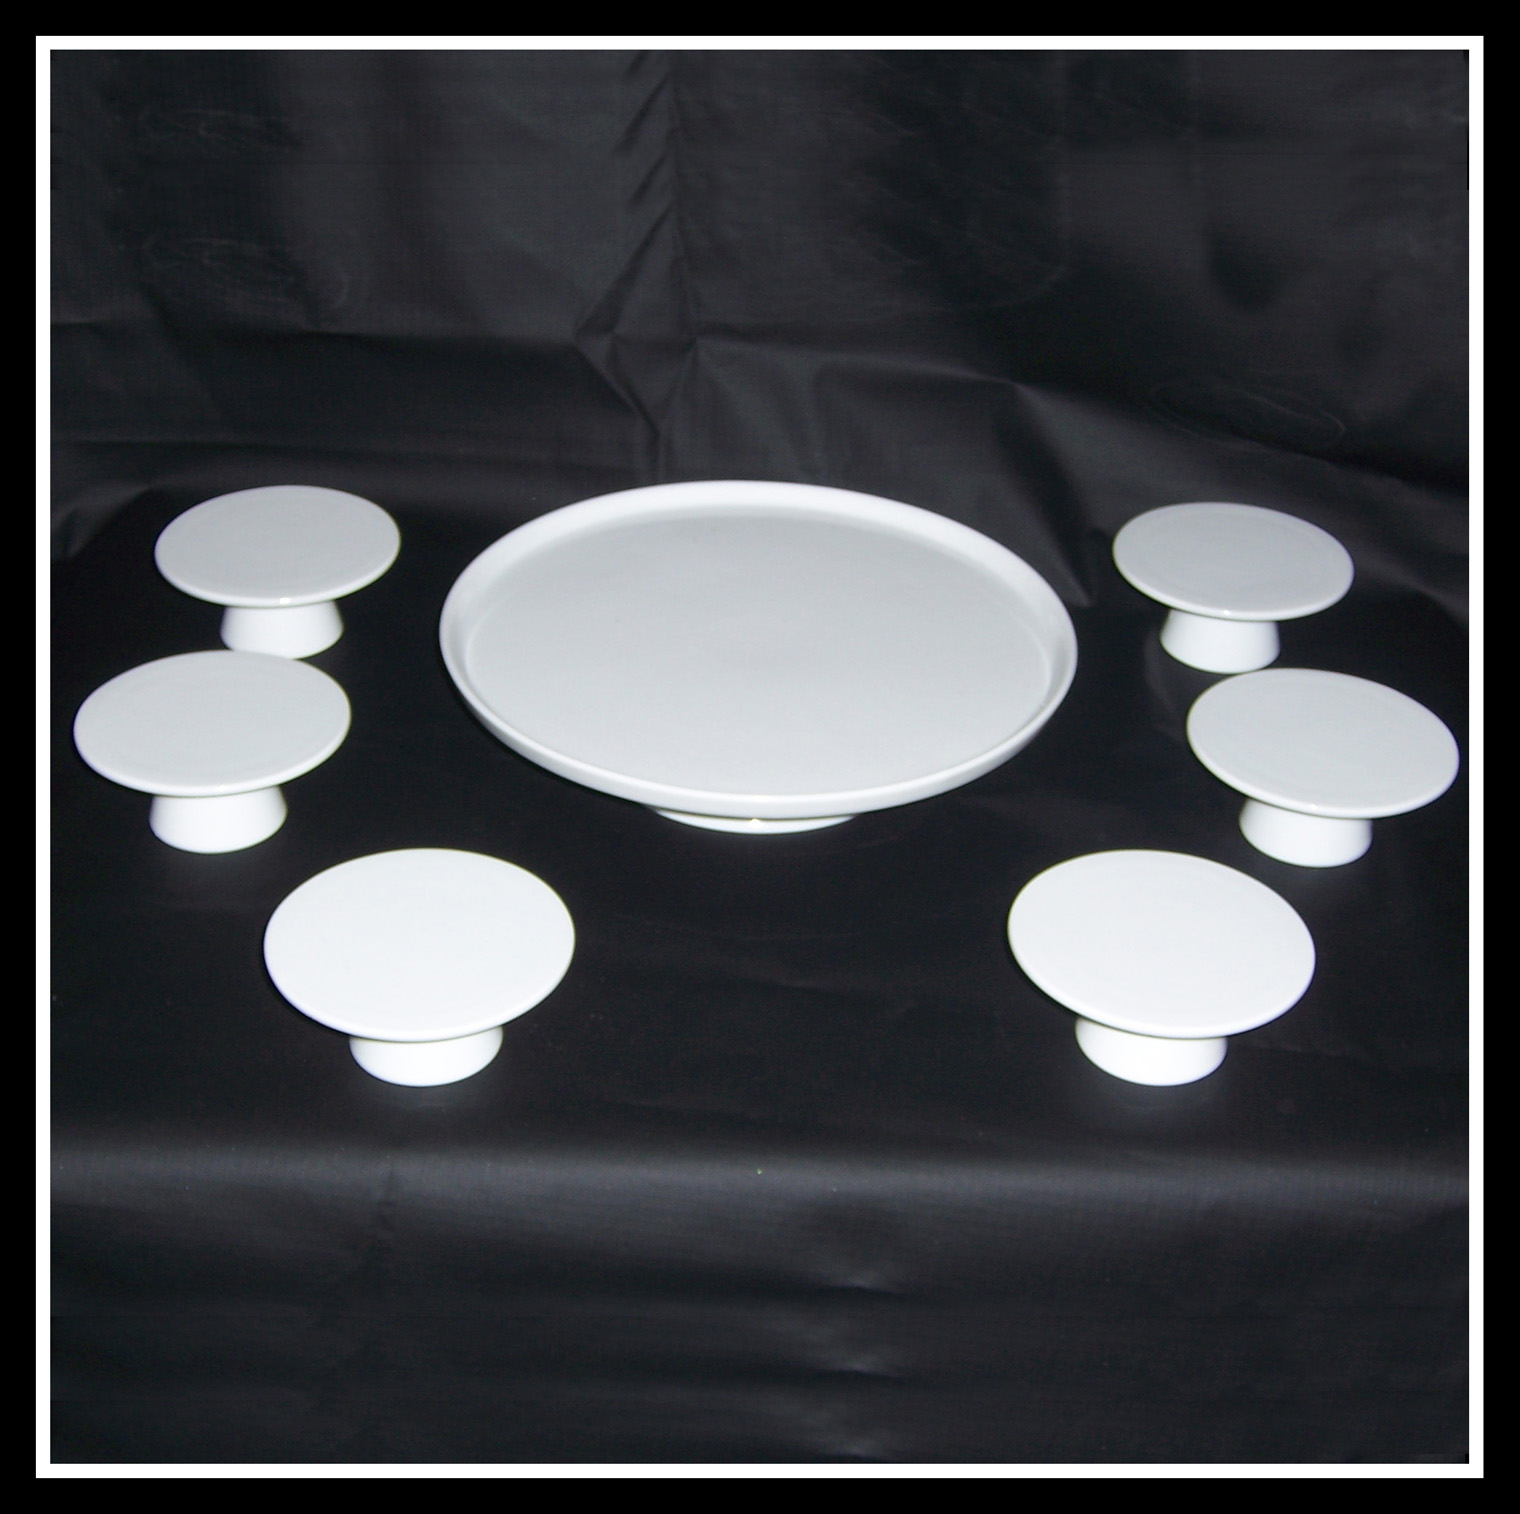 Set of 7 white round ceramic stands